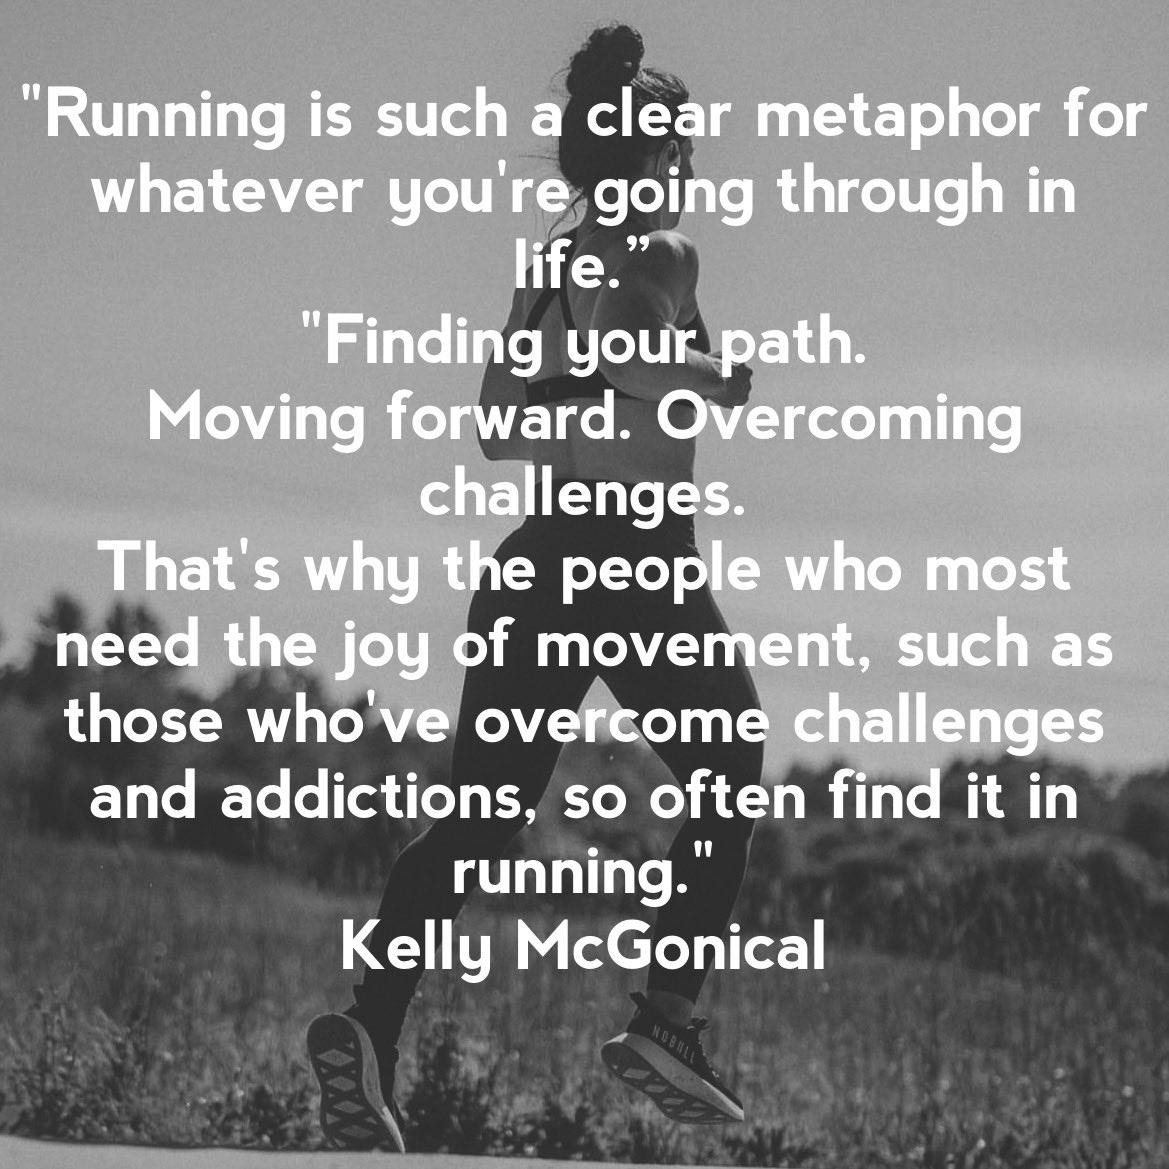 Running 

#run #runningismytherapy #runnerslife #gym #training #exercise #healthylifestyle #runtoinspire #iloverunning #workout #crossfit #sport #health #fitness #runrunrun #marathontraining #motivation #runnersworld #fit #runnershigh #fitspo #fitnessmotivation #fitfam #runner